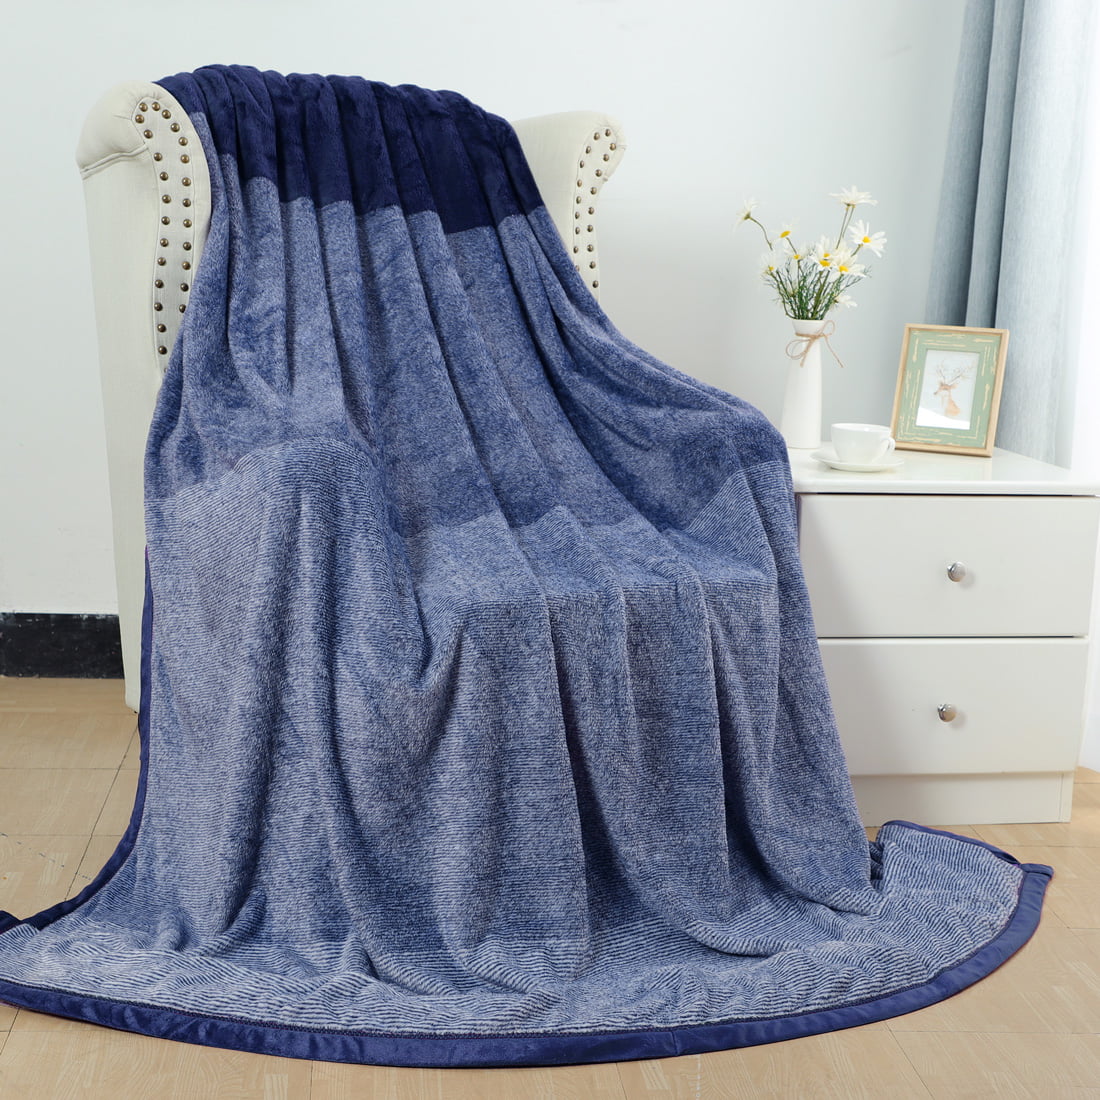 Unique Bargains Soft Warm Fuzzy Microfiber Gradient Blanket Navy Blue ...